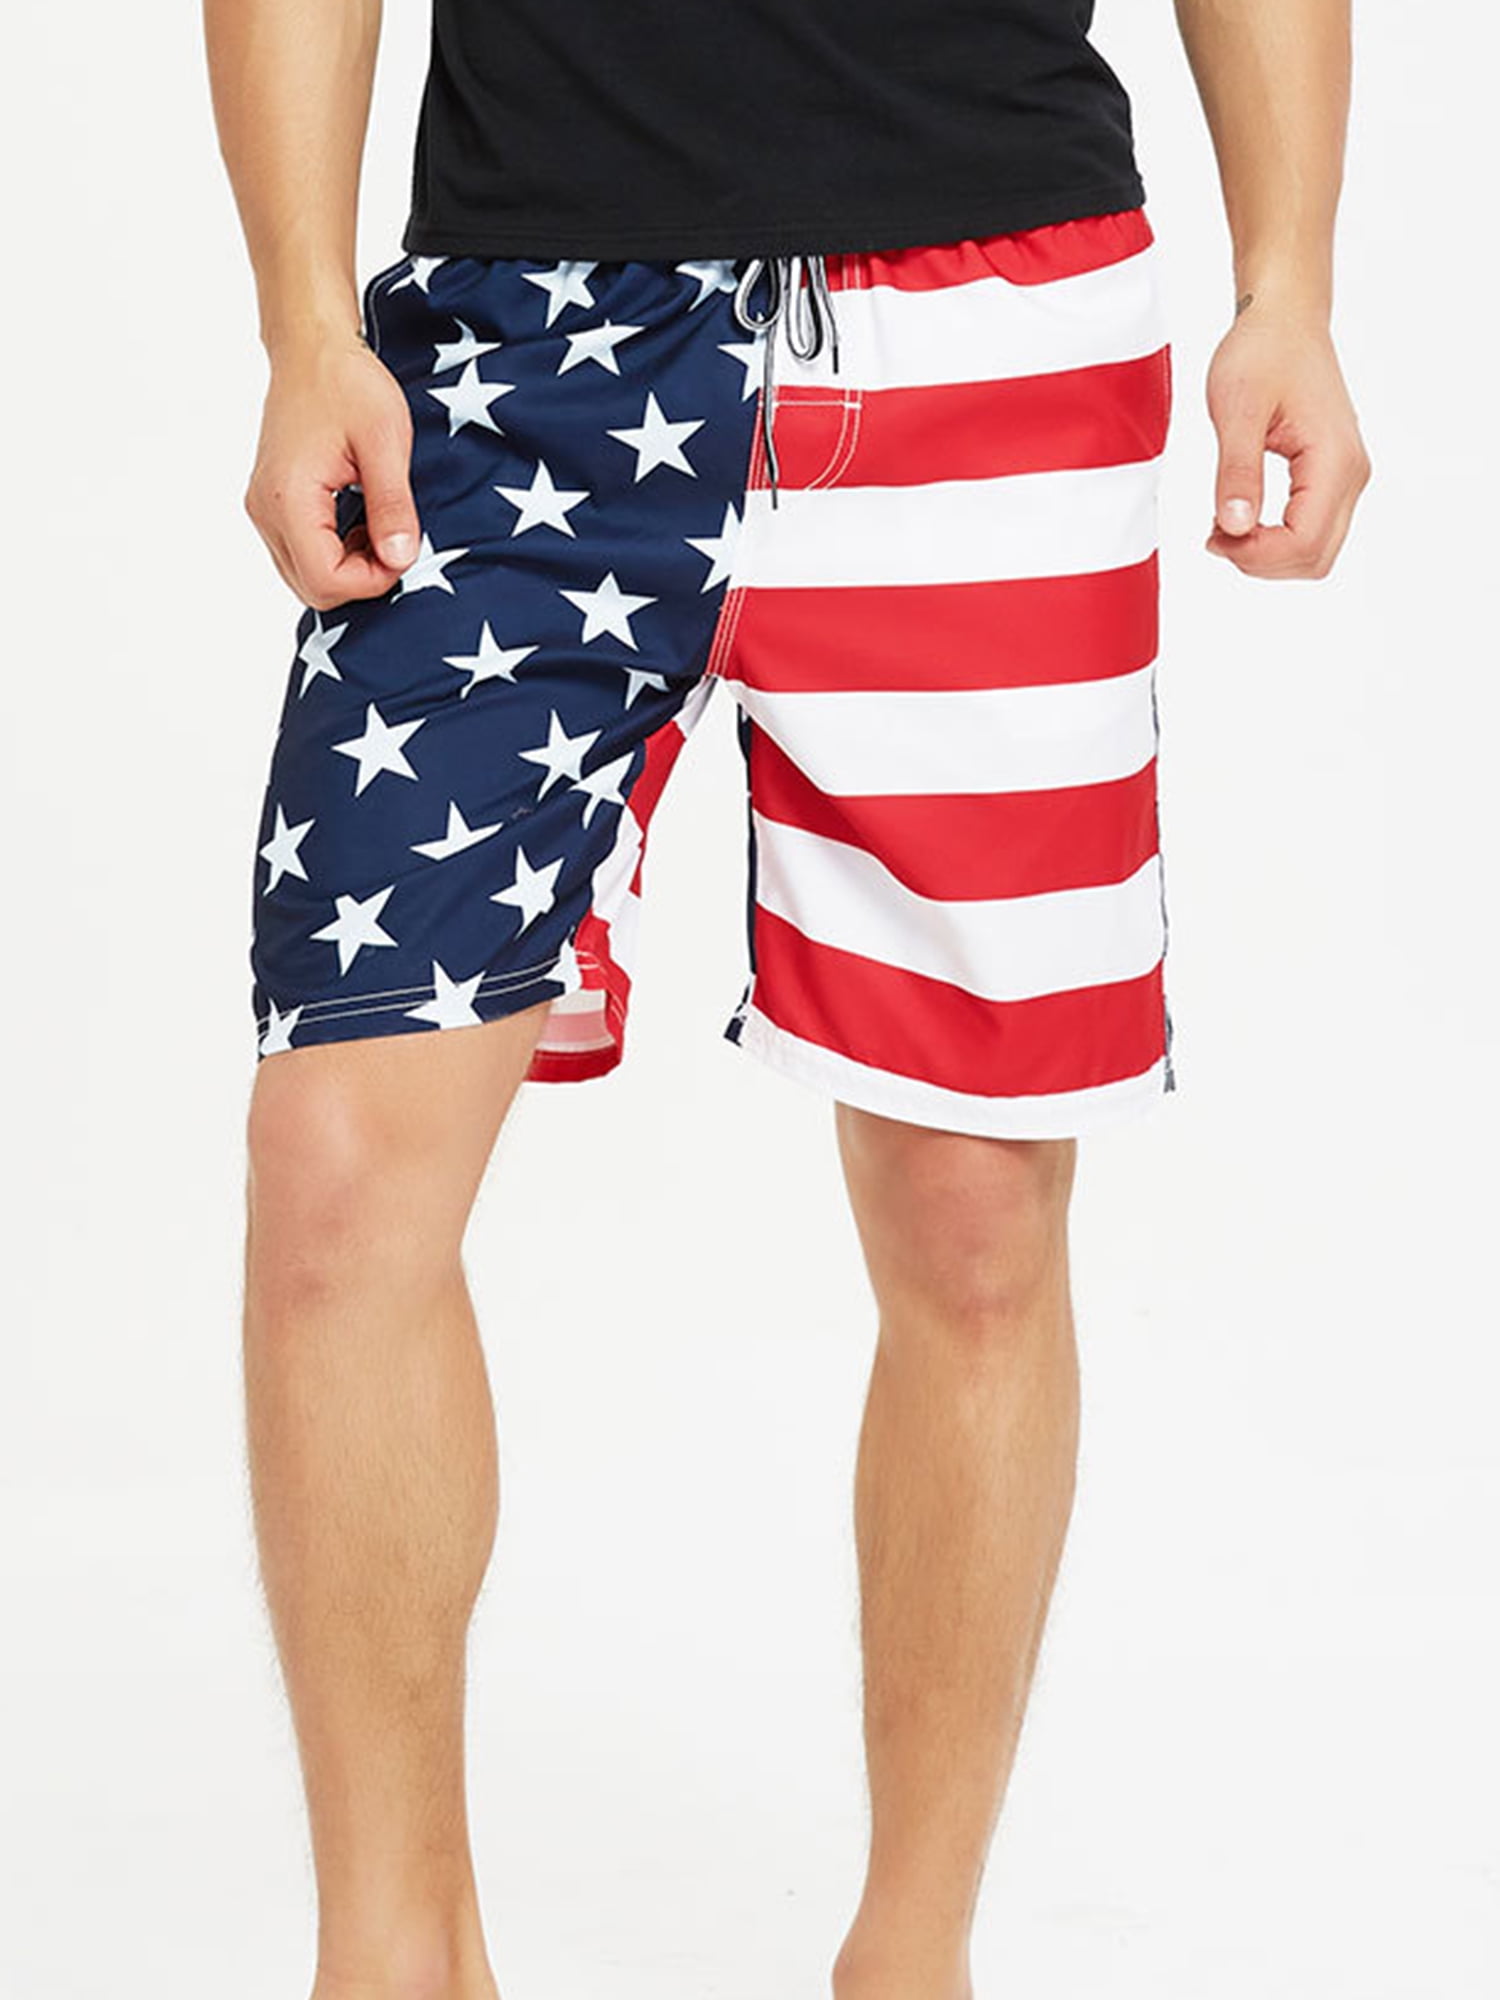 STDKNSK9 Mens American Half Turkey Flag Boardshorts Beach Pants